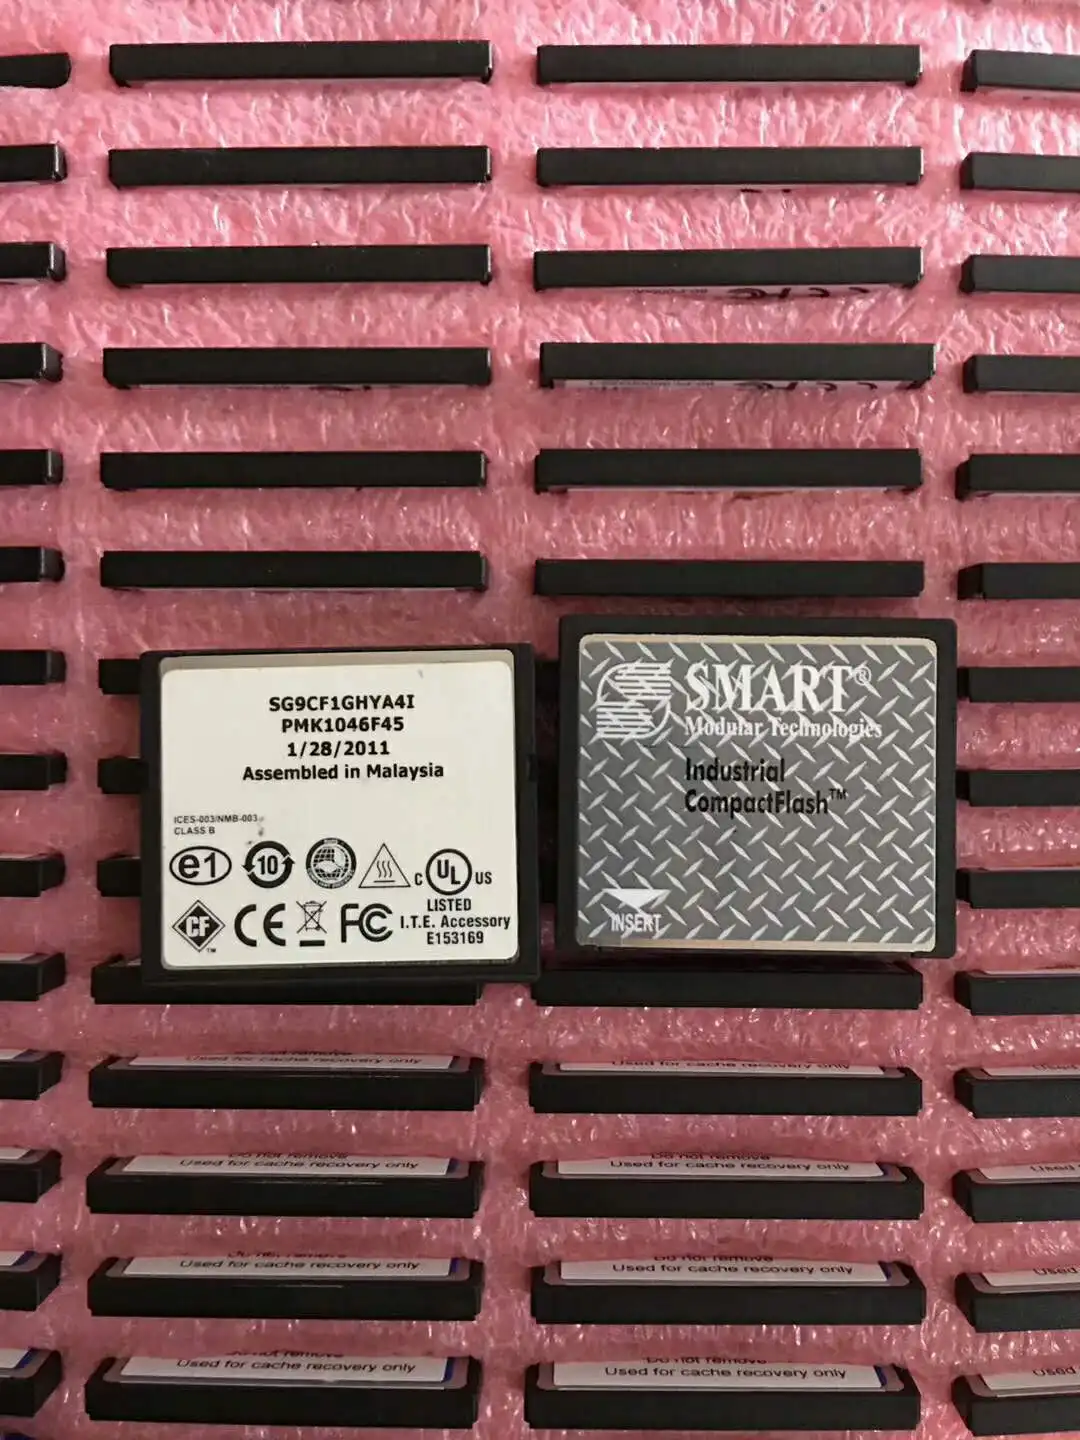 Industrial CompactFlash  CF Card 1GB,4GB  in stock